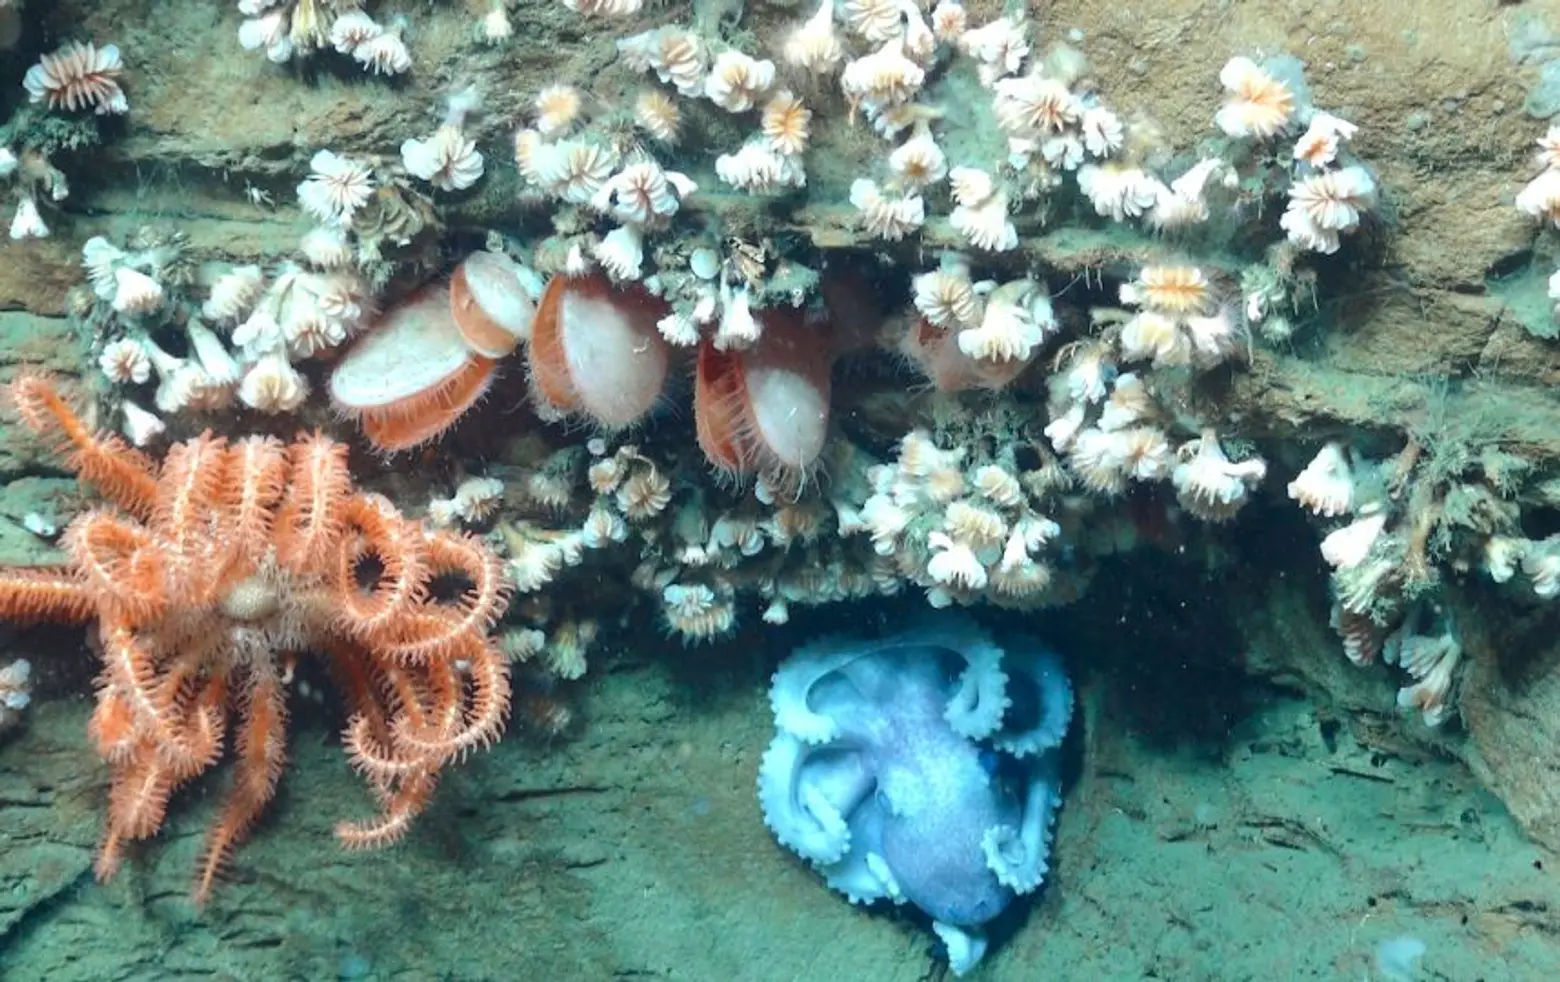 octopus-and-desmophyllum-deepwater-canyons-2013-expedition-noaa-oer-boem-usgs